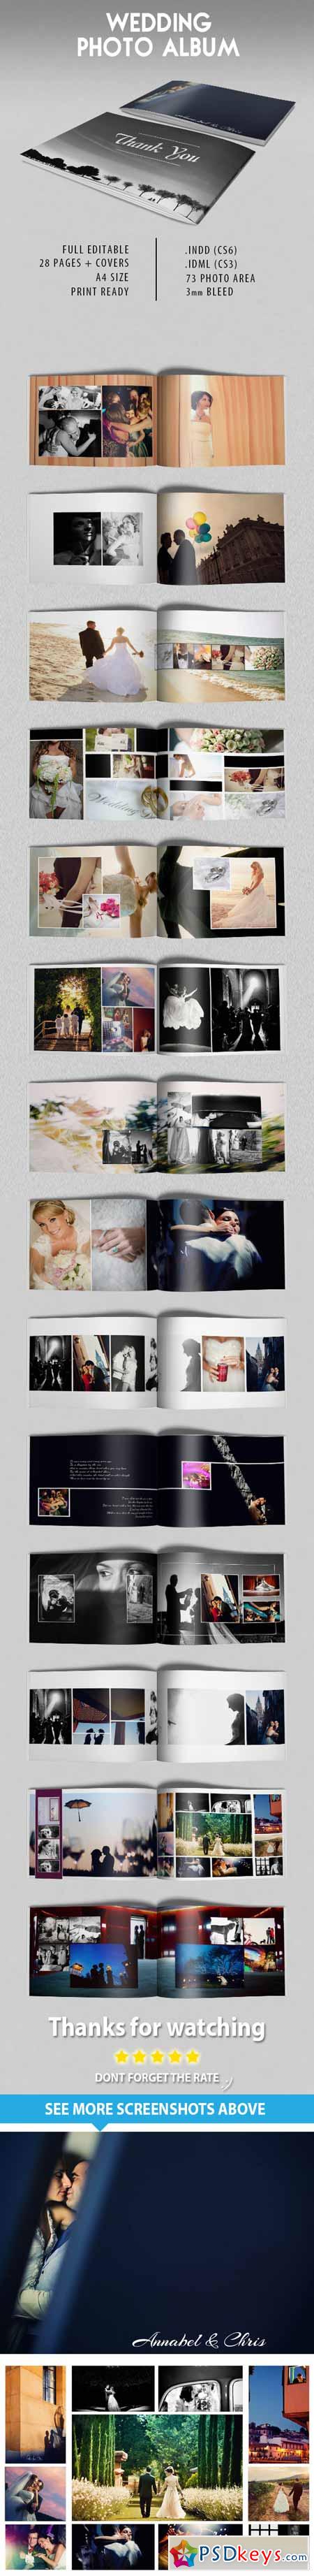 Wedding Photo Album Catalogue -3 326330